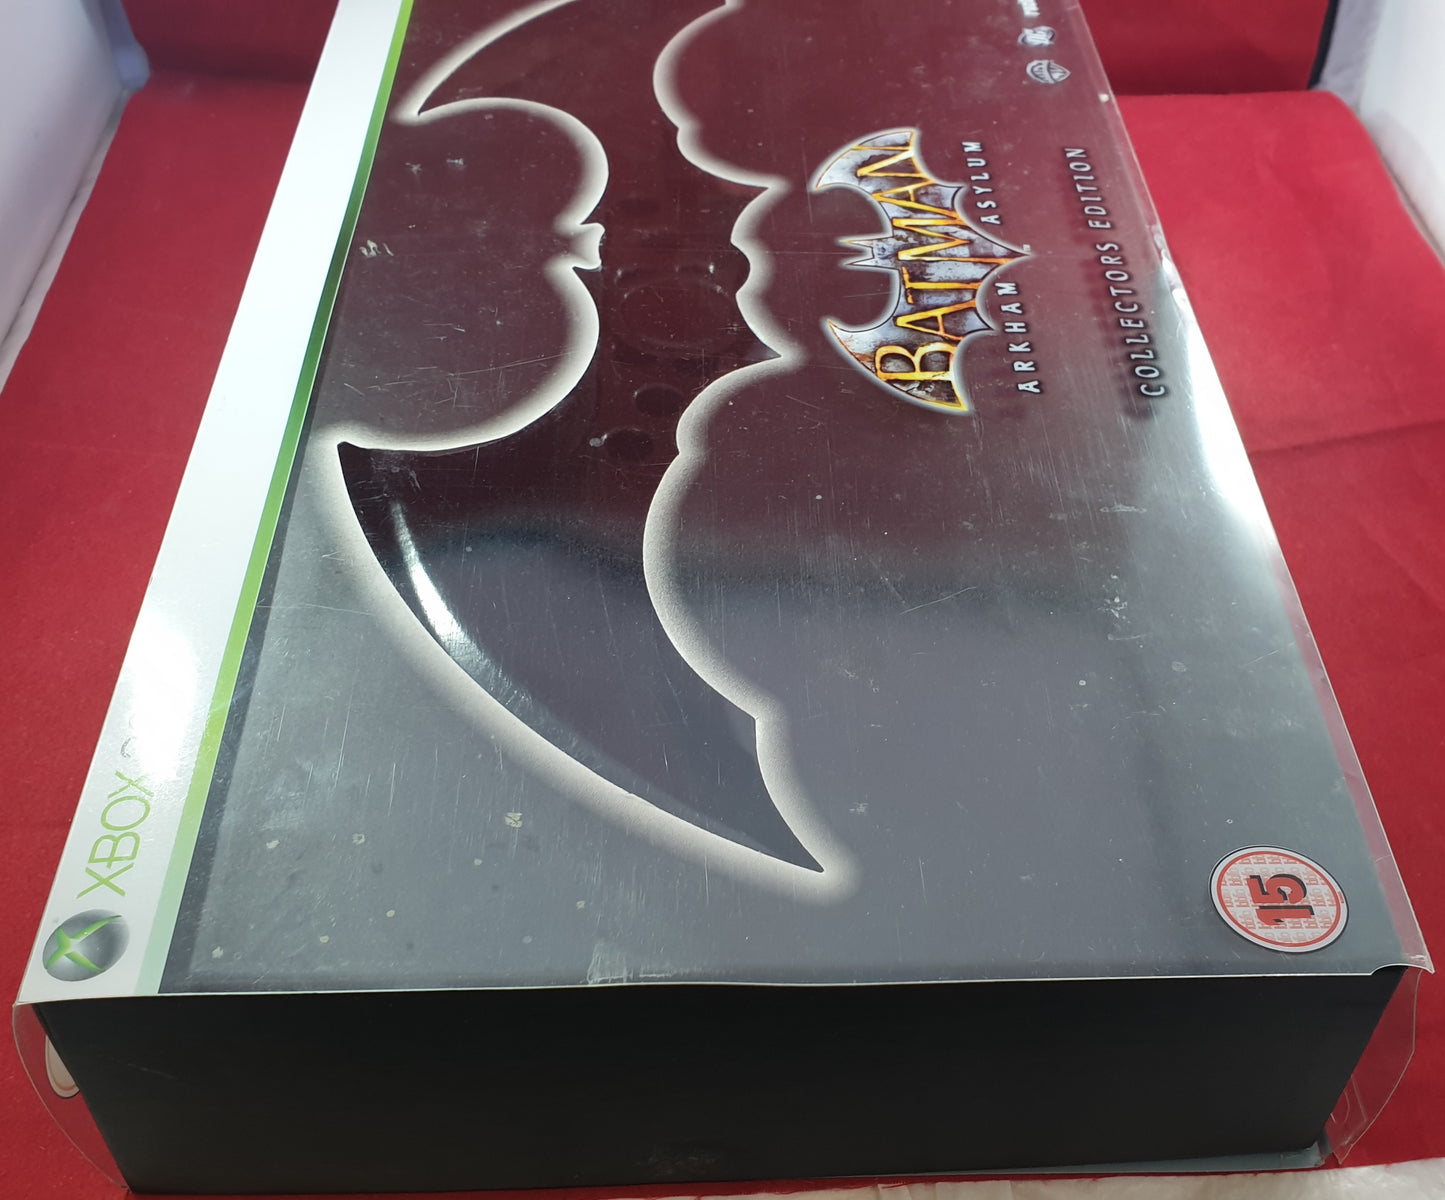 Batman Arkham Ayslum Collectors Edition Xbox 360 Game